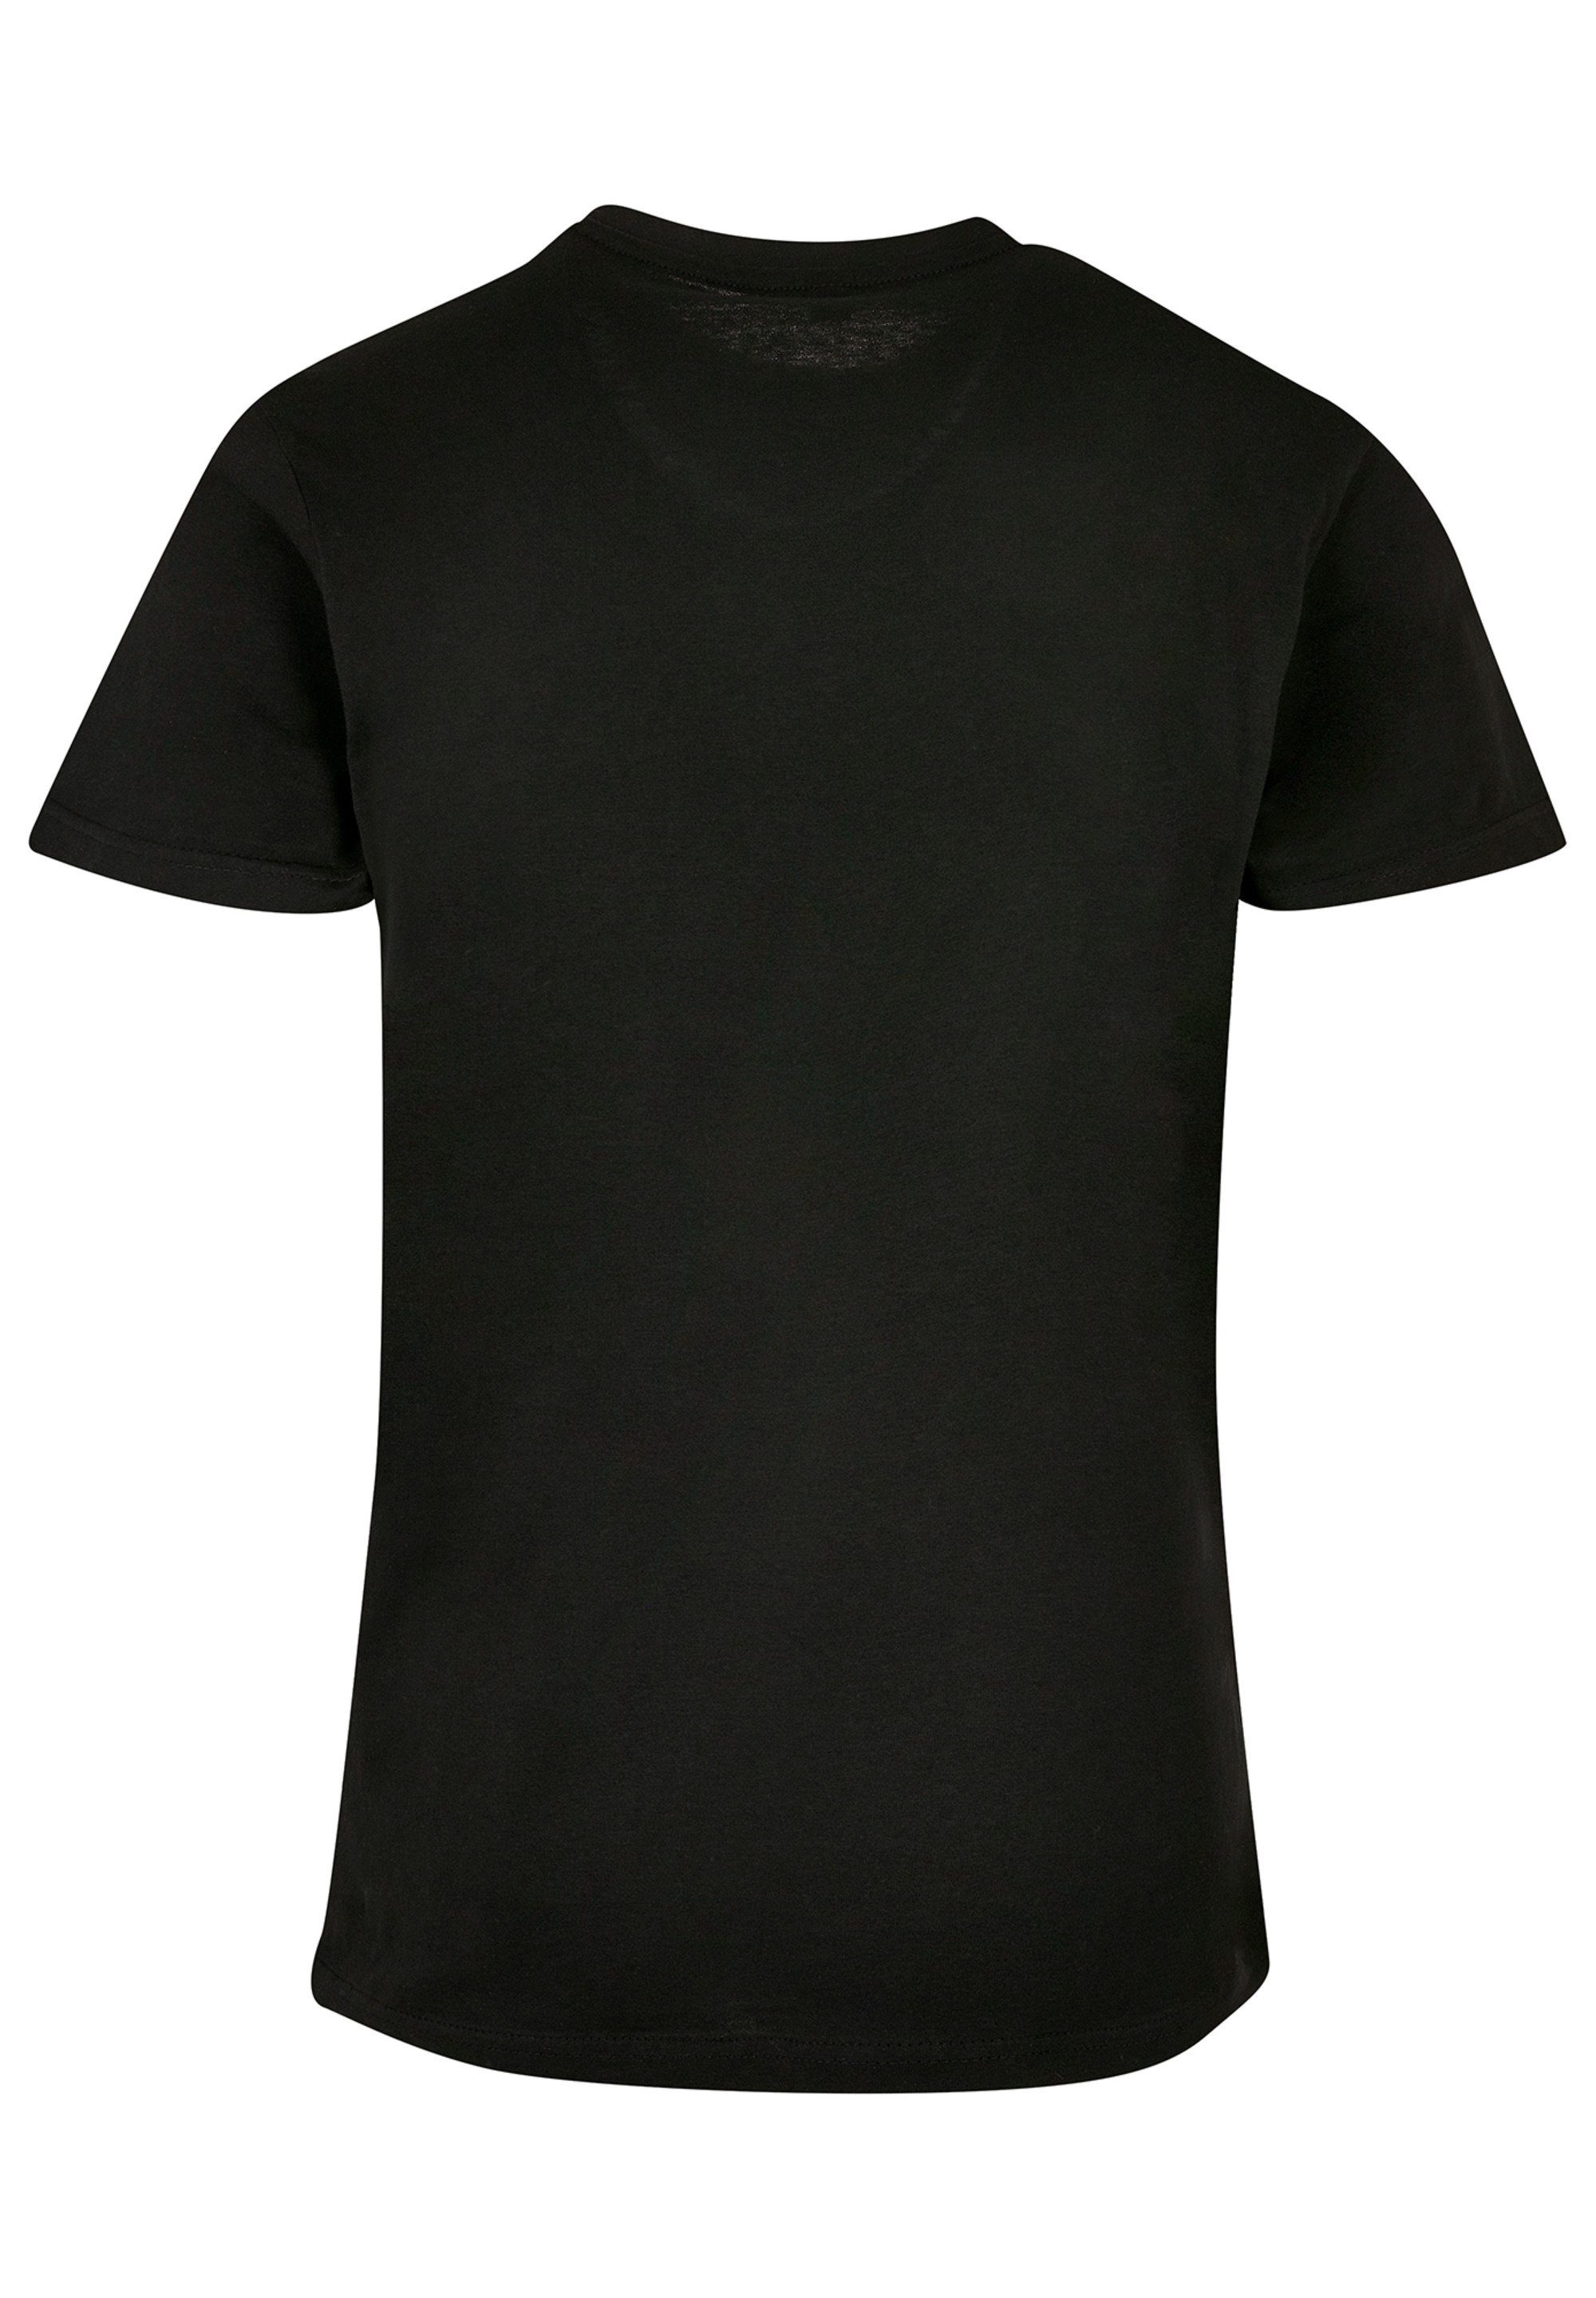 F4NT4STIC T-Shirt Schmetterling Silhouette TEE Print UNISEX schwarz